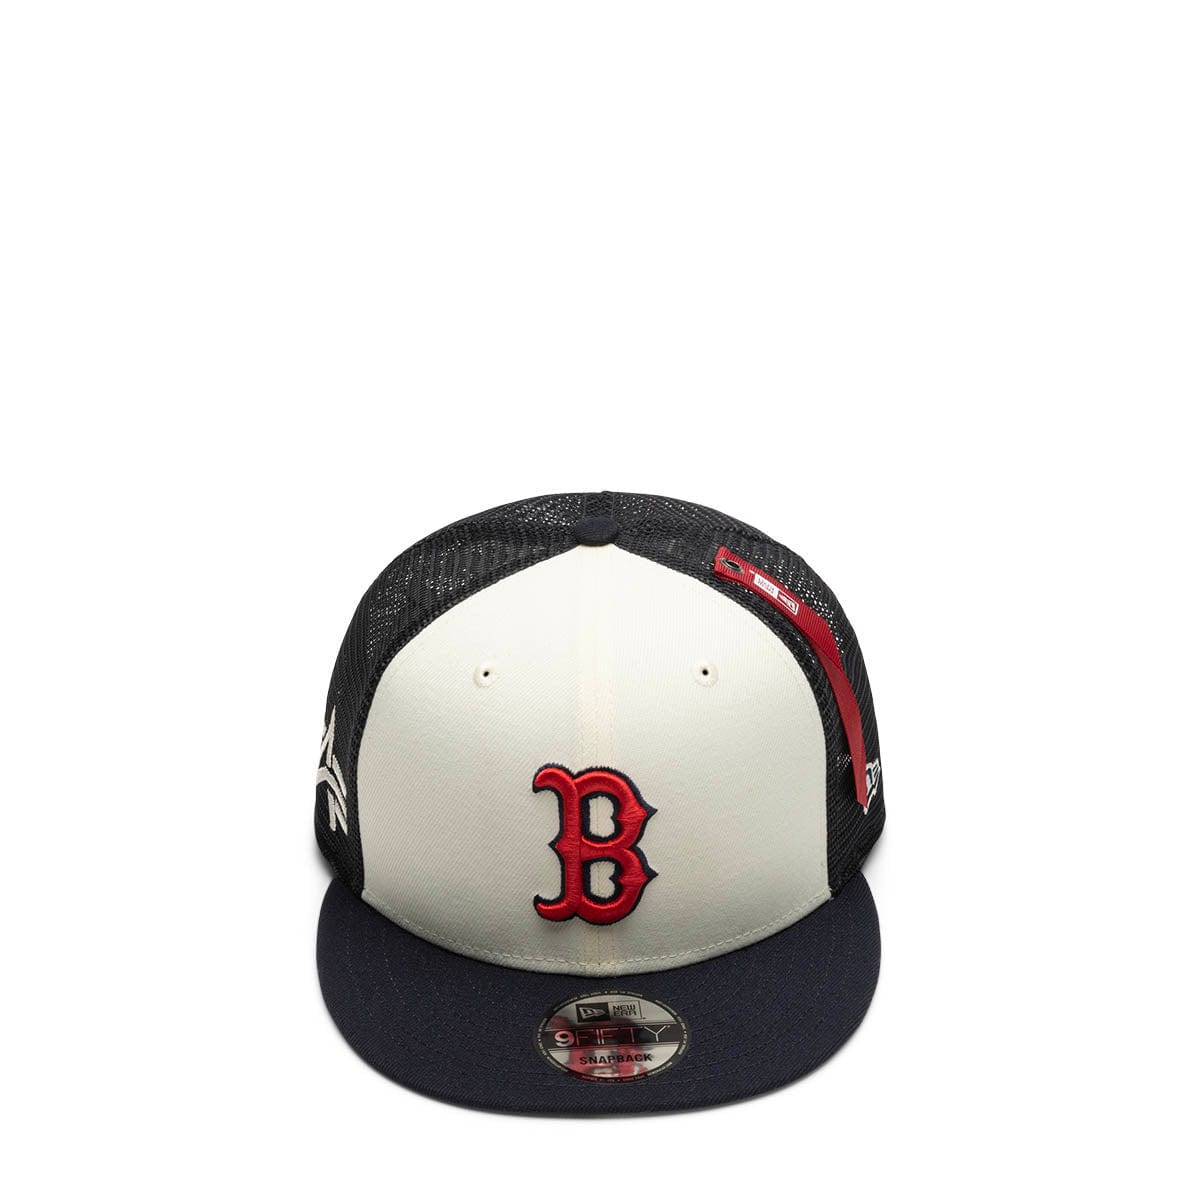 Infant New Era Navy Boston Red Sox Bucket Hat